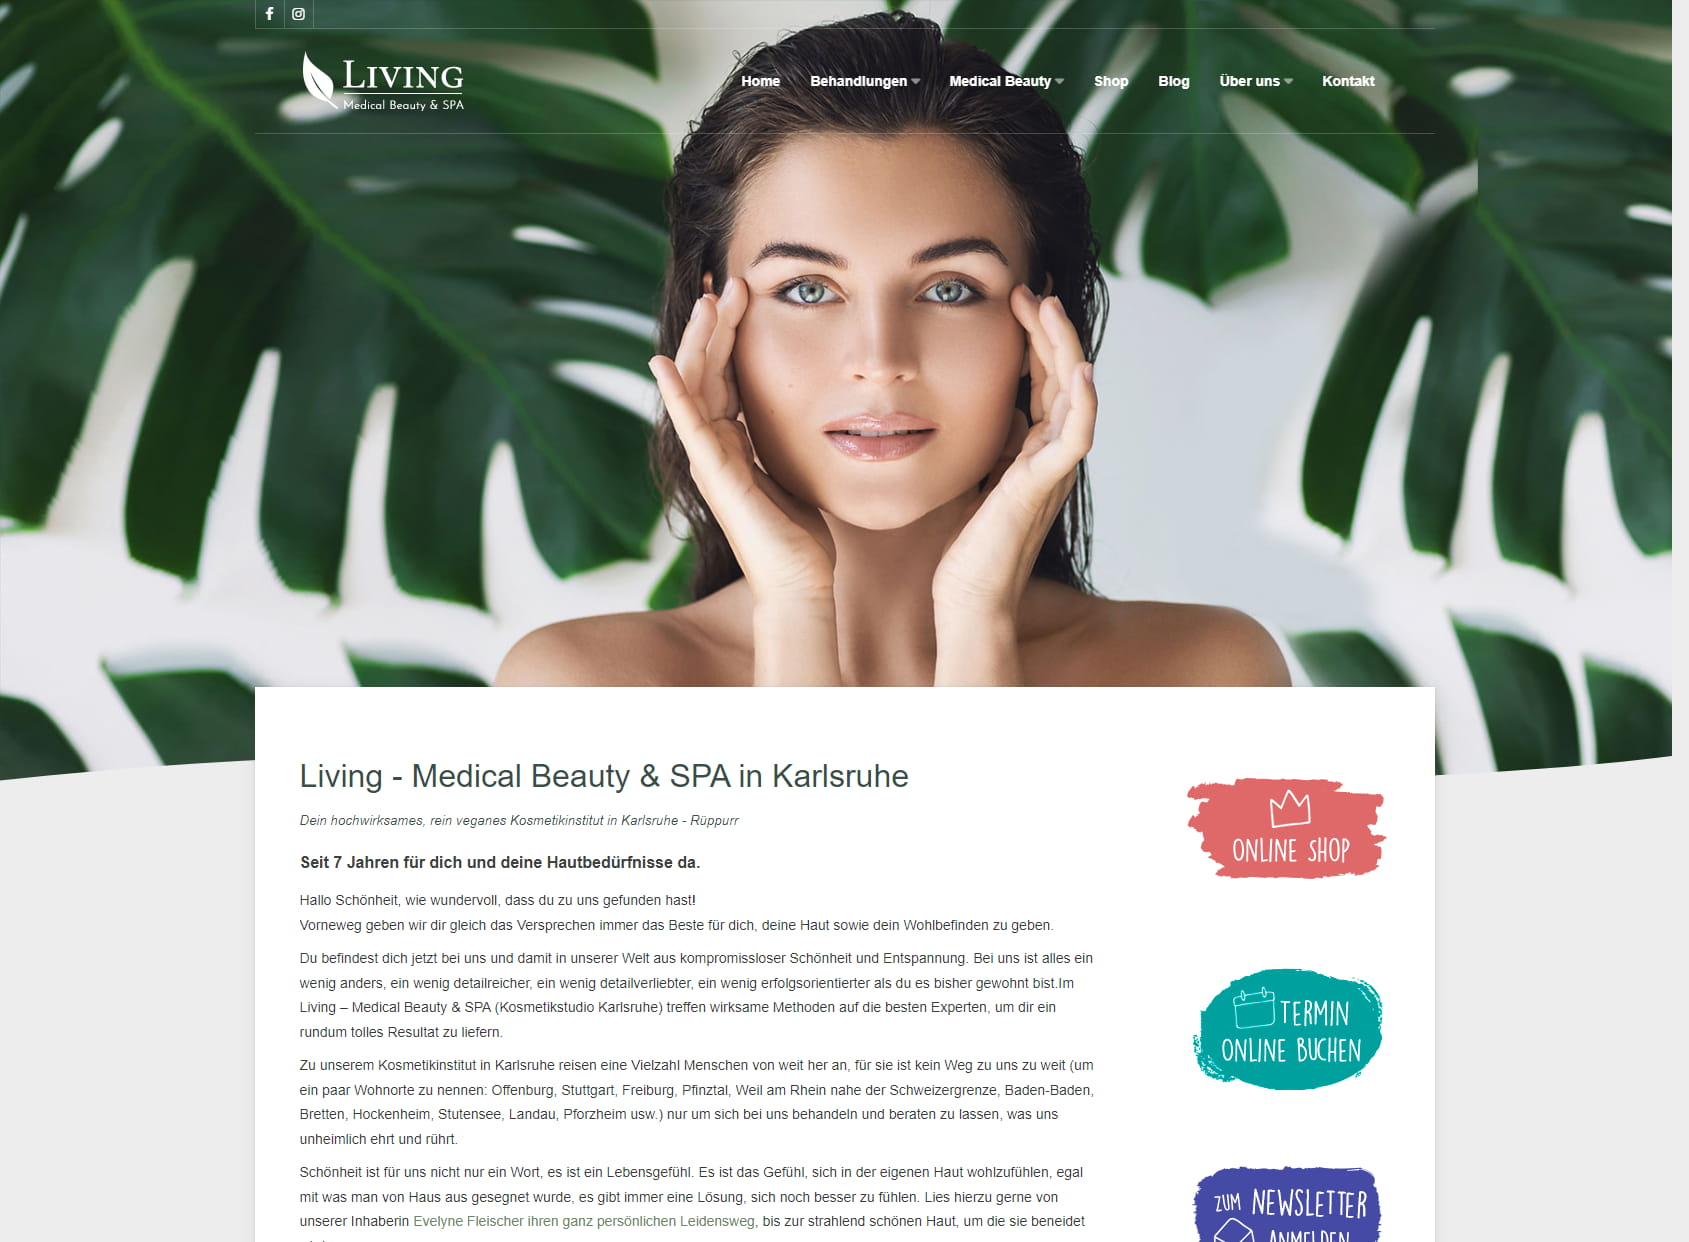 Living - Medical Beauty & SPA